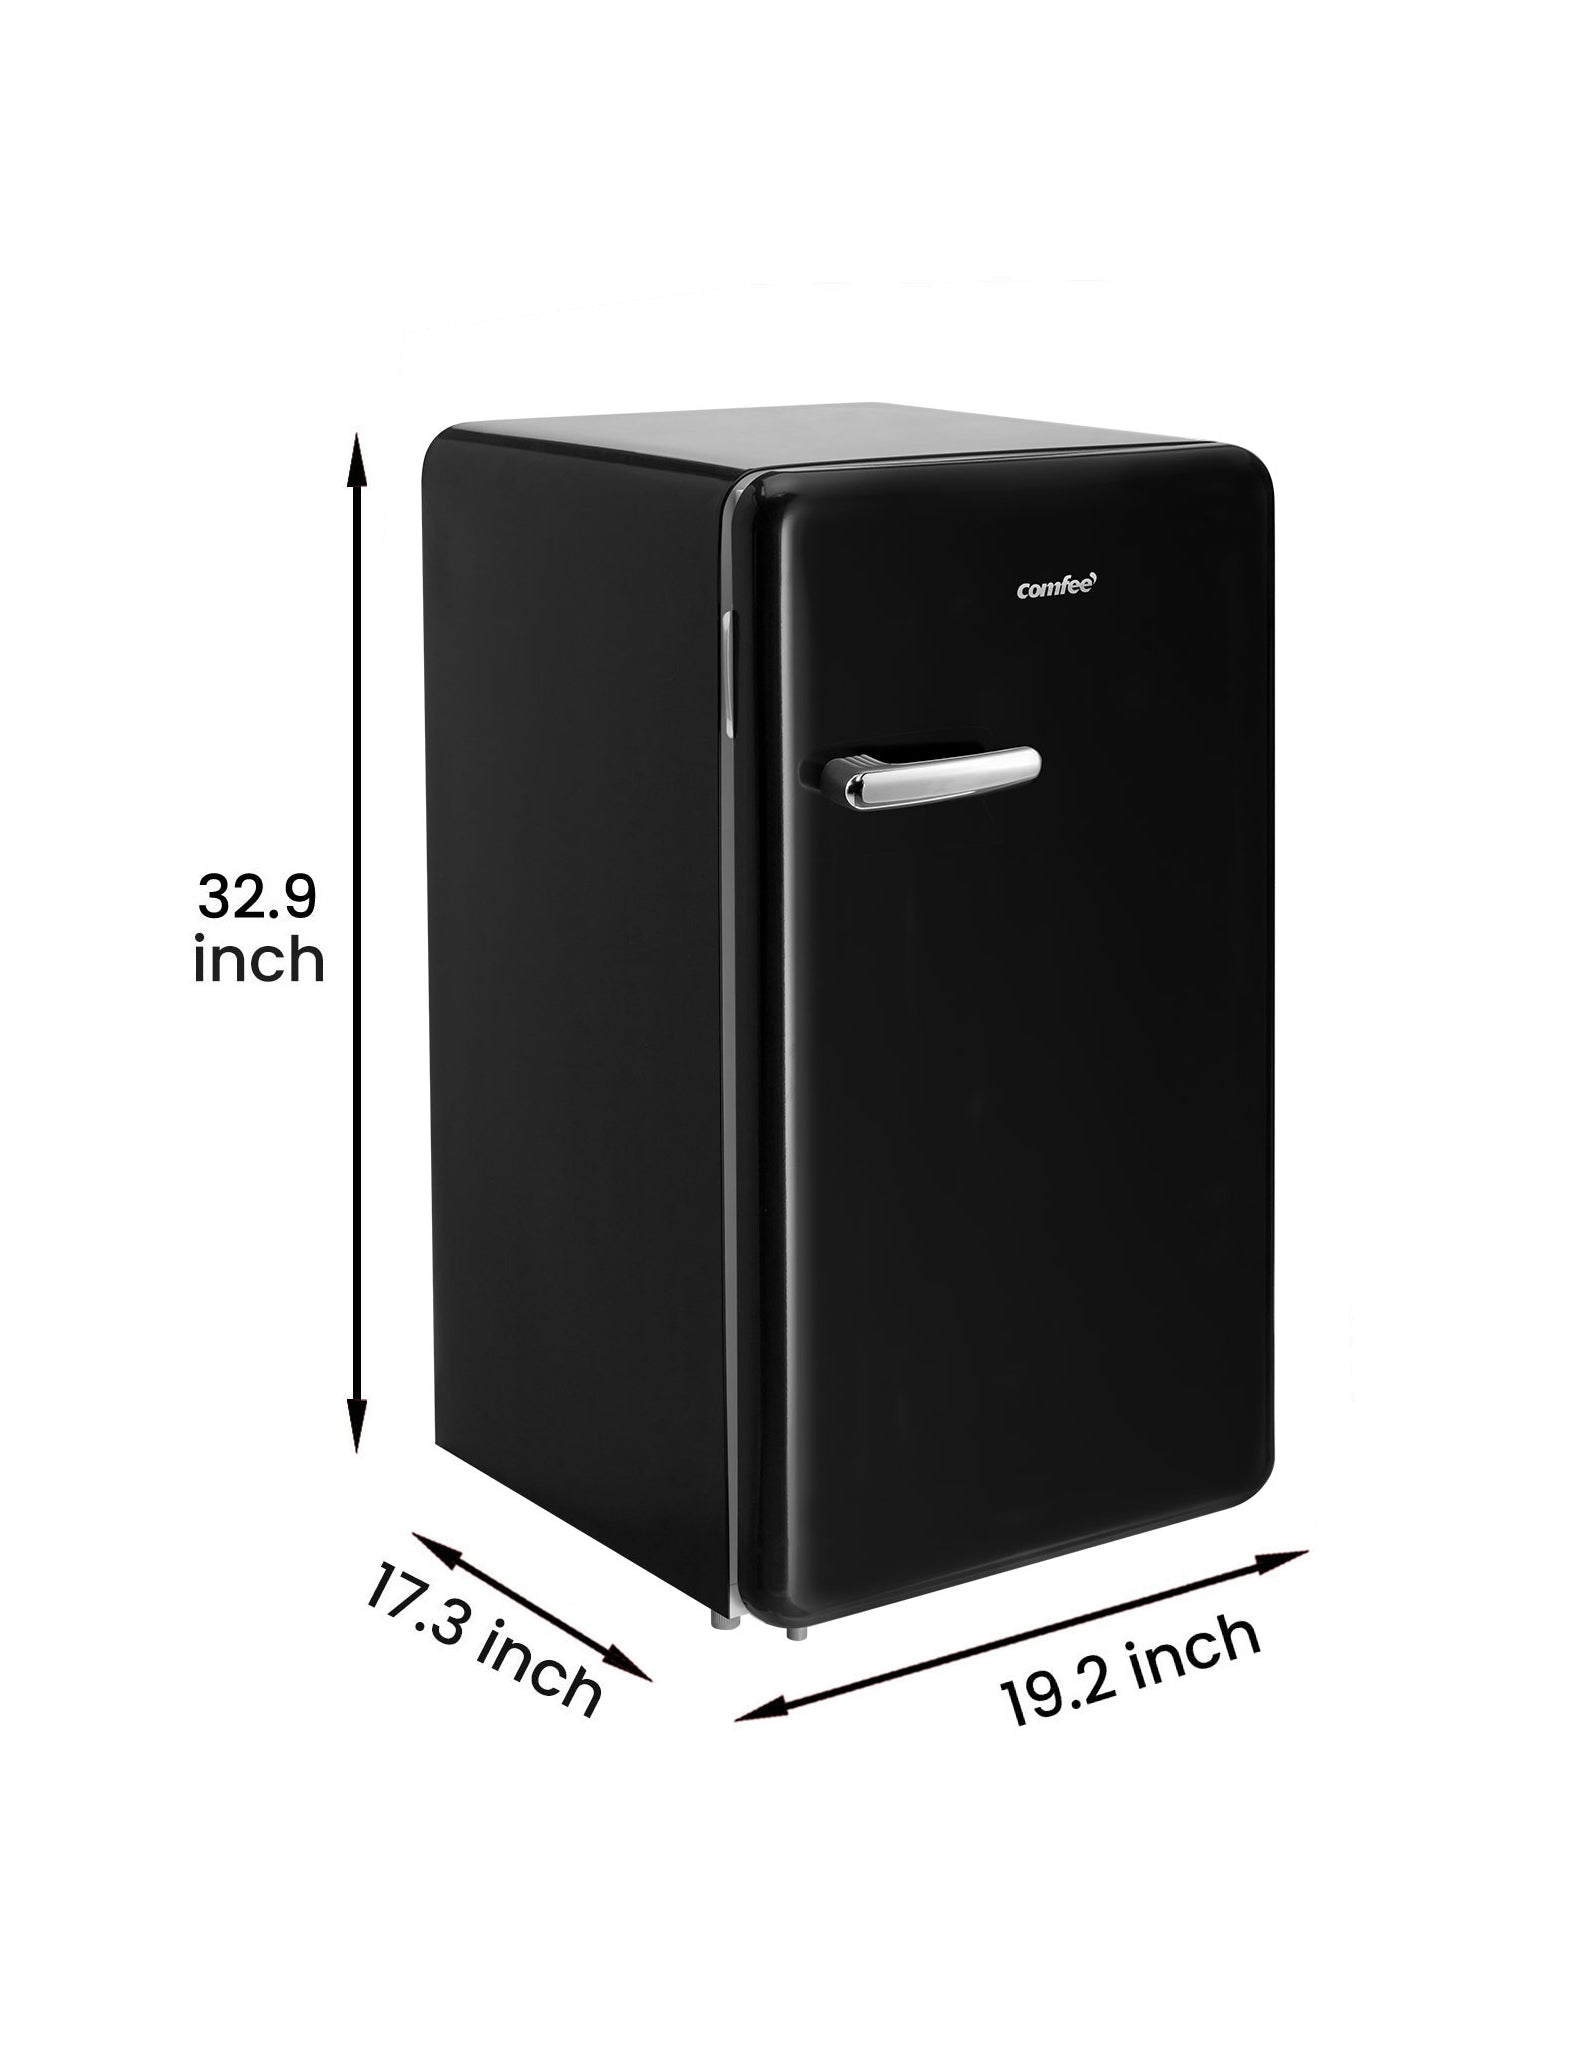 dimensions of comfee retro refrigerator